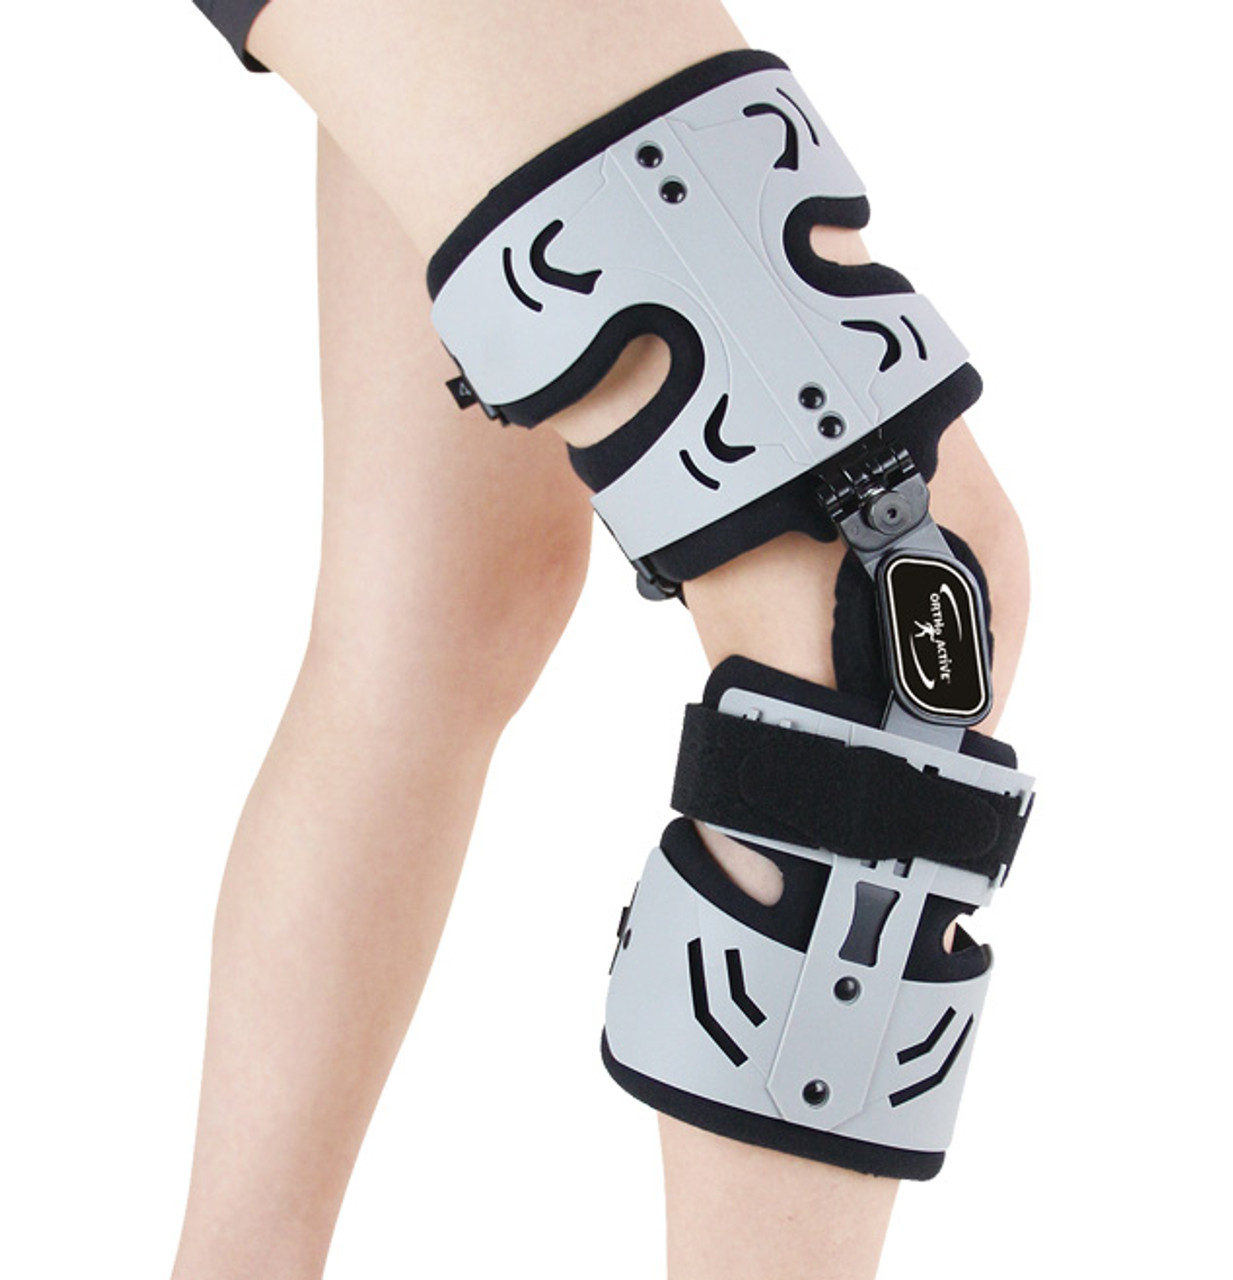 OrthoActive 5539 Osteo-Arthritis Knee Brace Universal Size - Left or Right